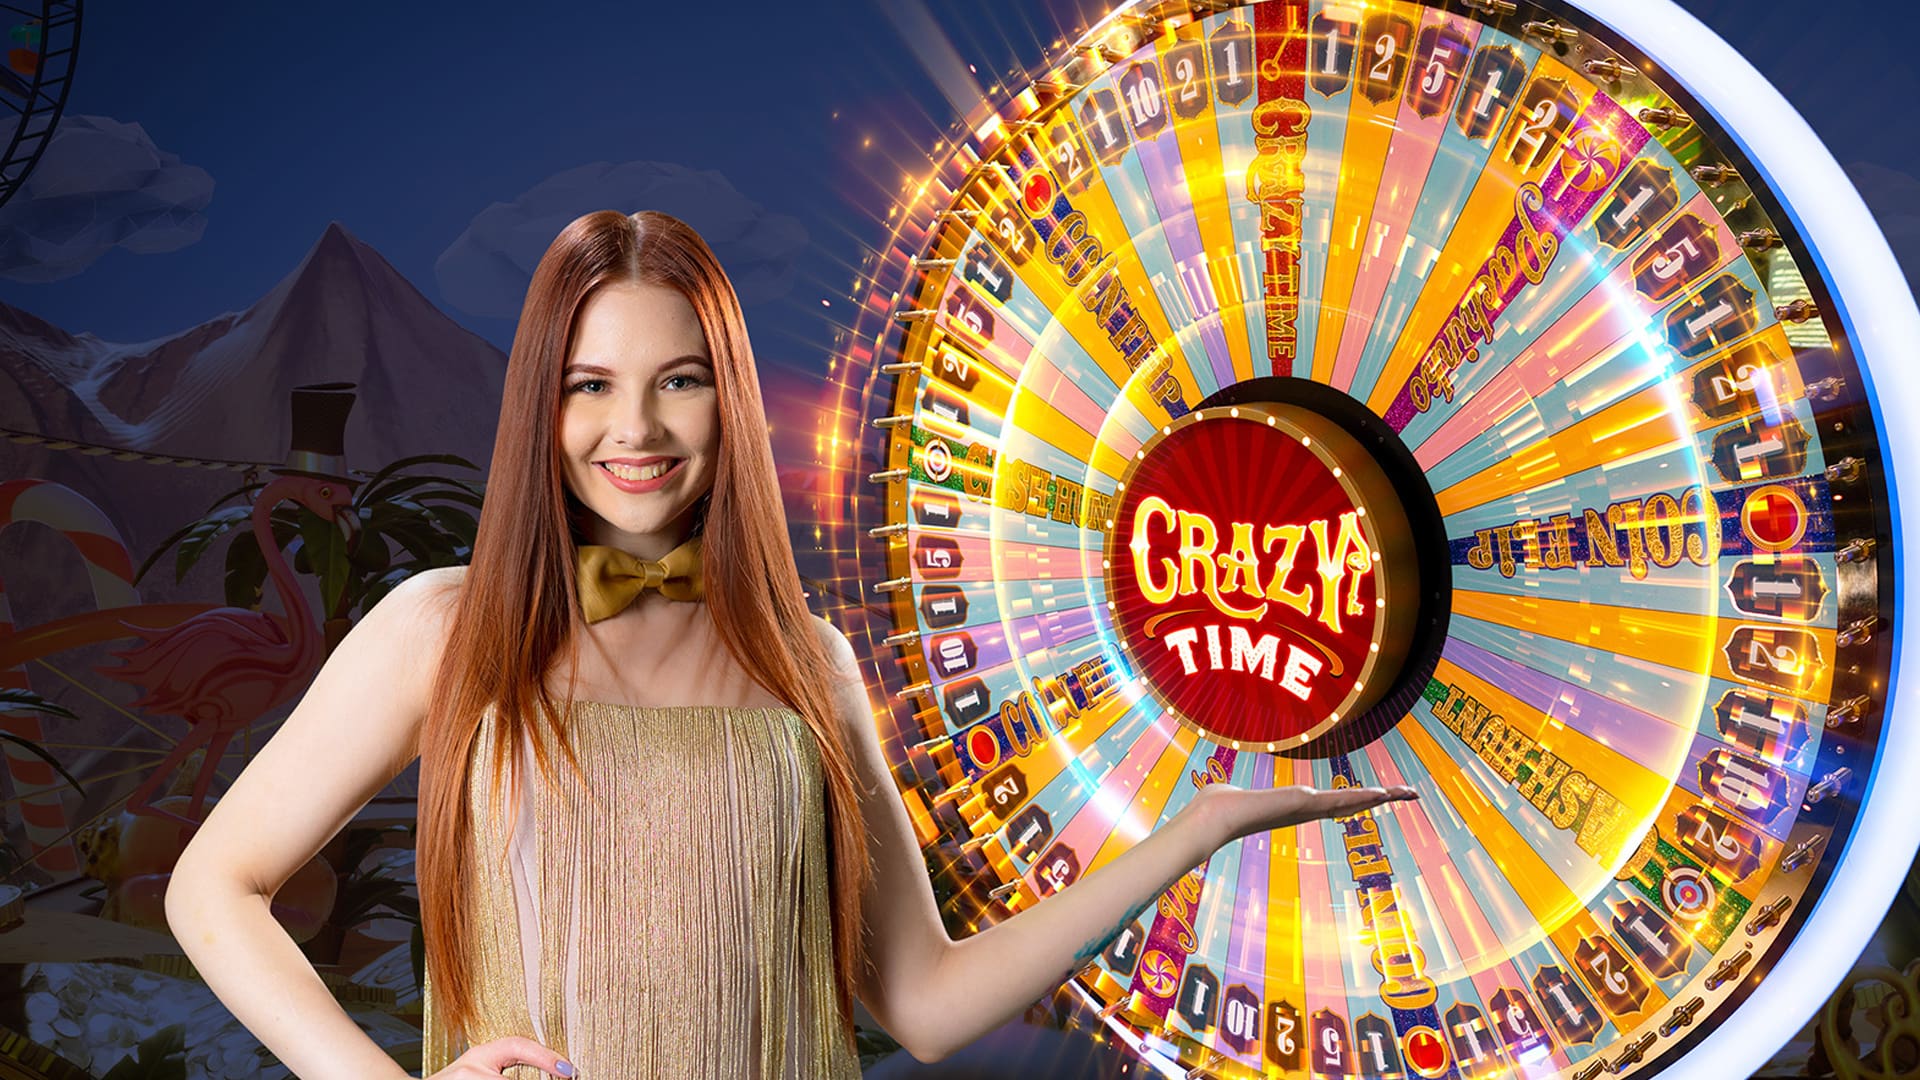 Crazy time play crazy times info. Crazy time. Crazy time казино. Crazy time казино лайв. Стрим казино.